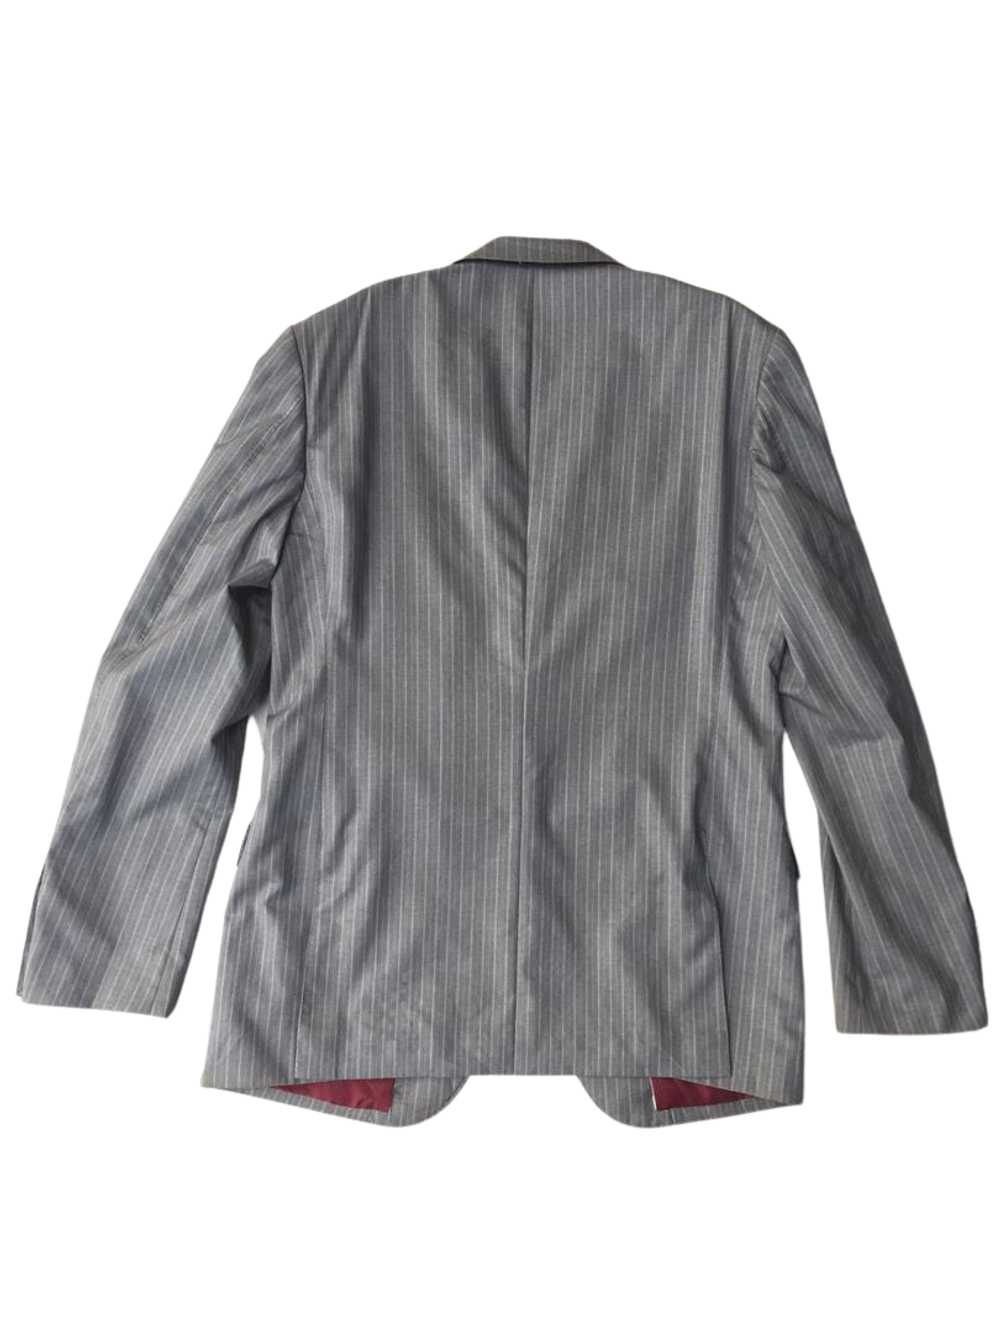 Paul Smith London Gray Stripe Wool Blazer Coat - image 2